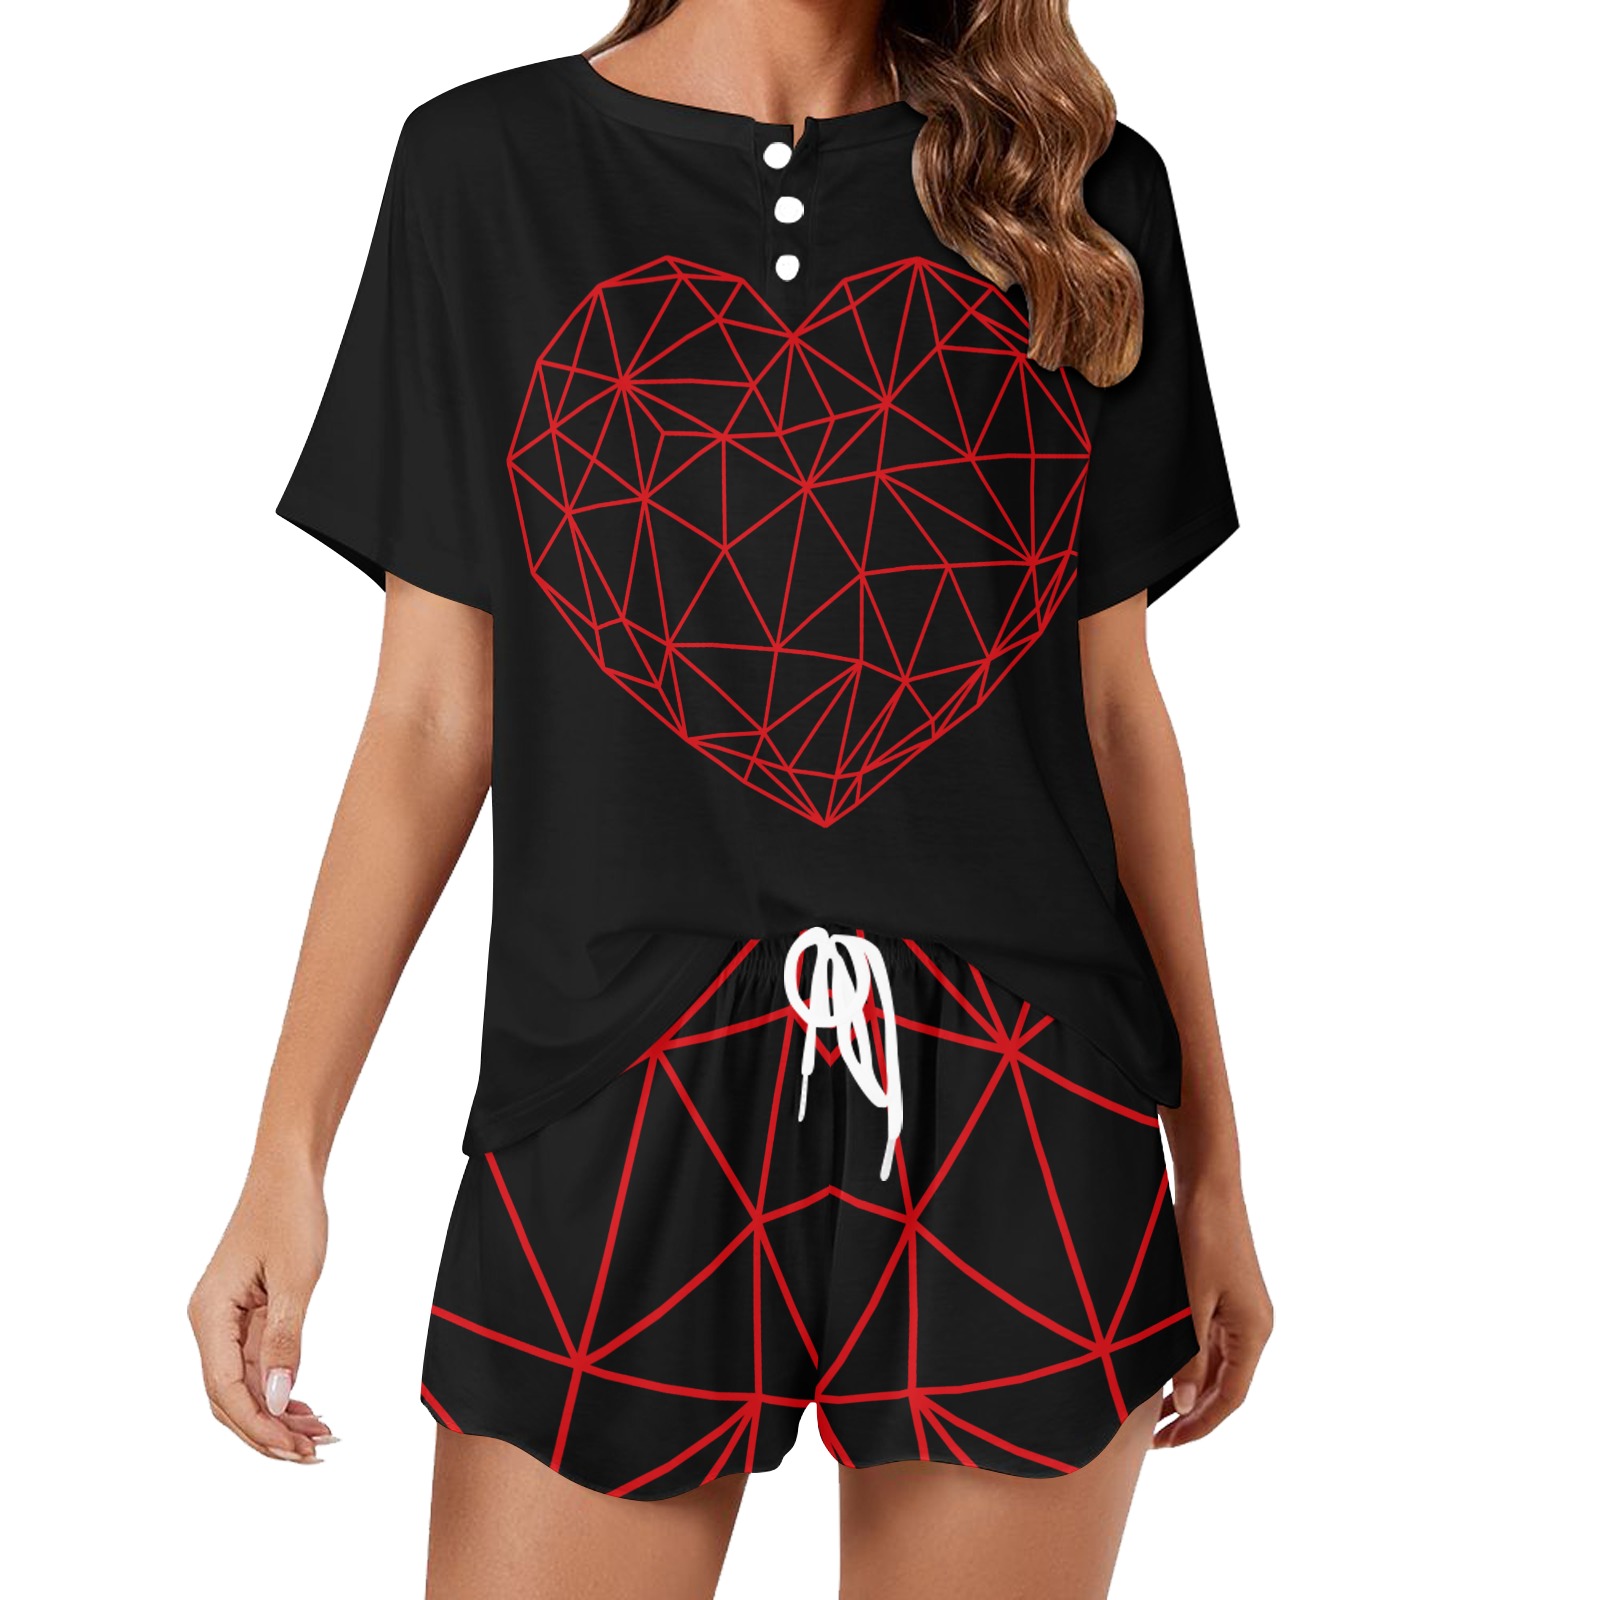 Red Geodesic Heart on Black Women's Mid-Length Shorts Pajama Set